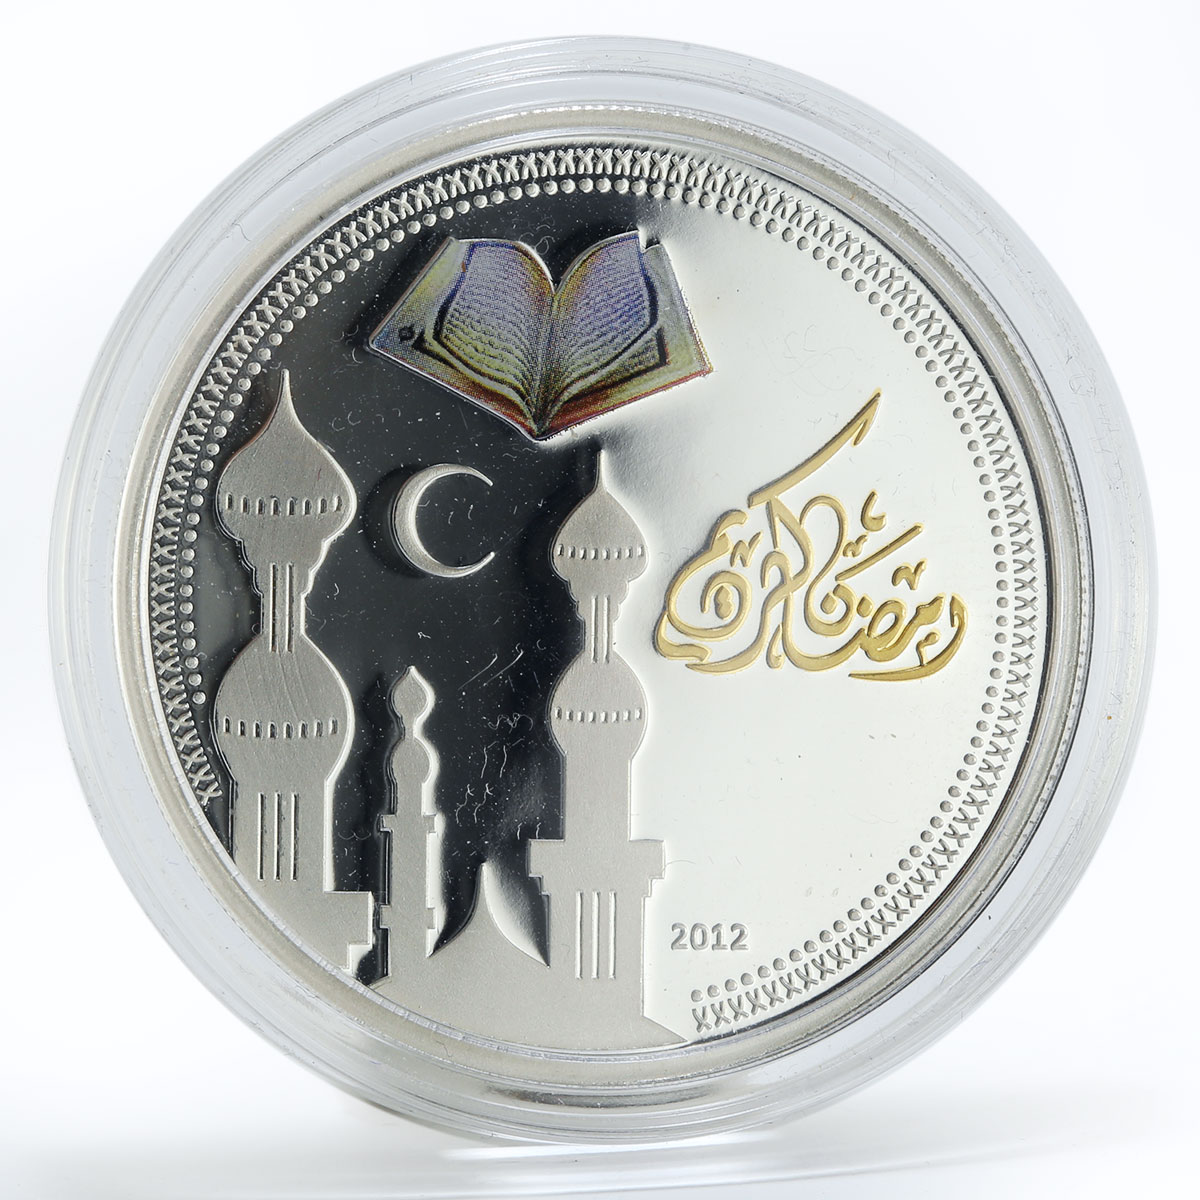 Niger 1000 francs Ramadan Karim Quran gilded colored silver coin 2012